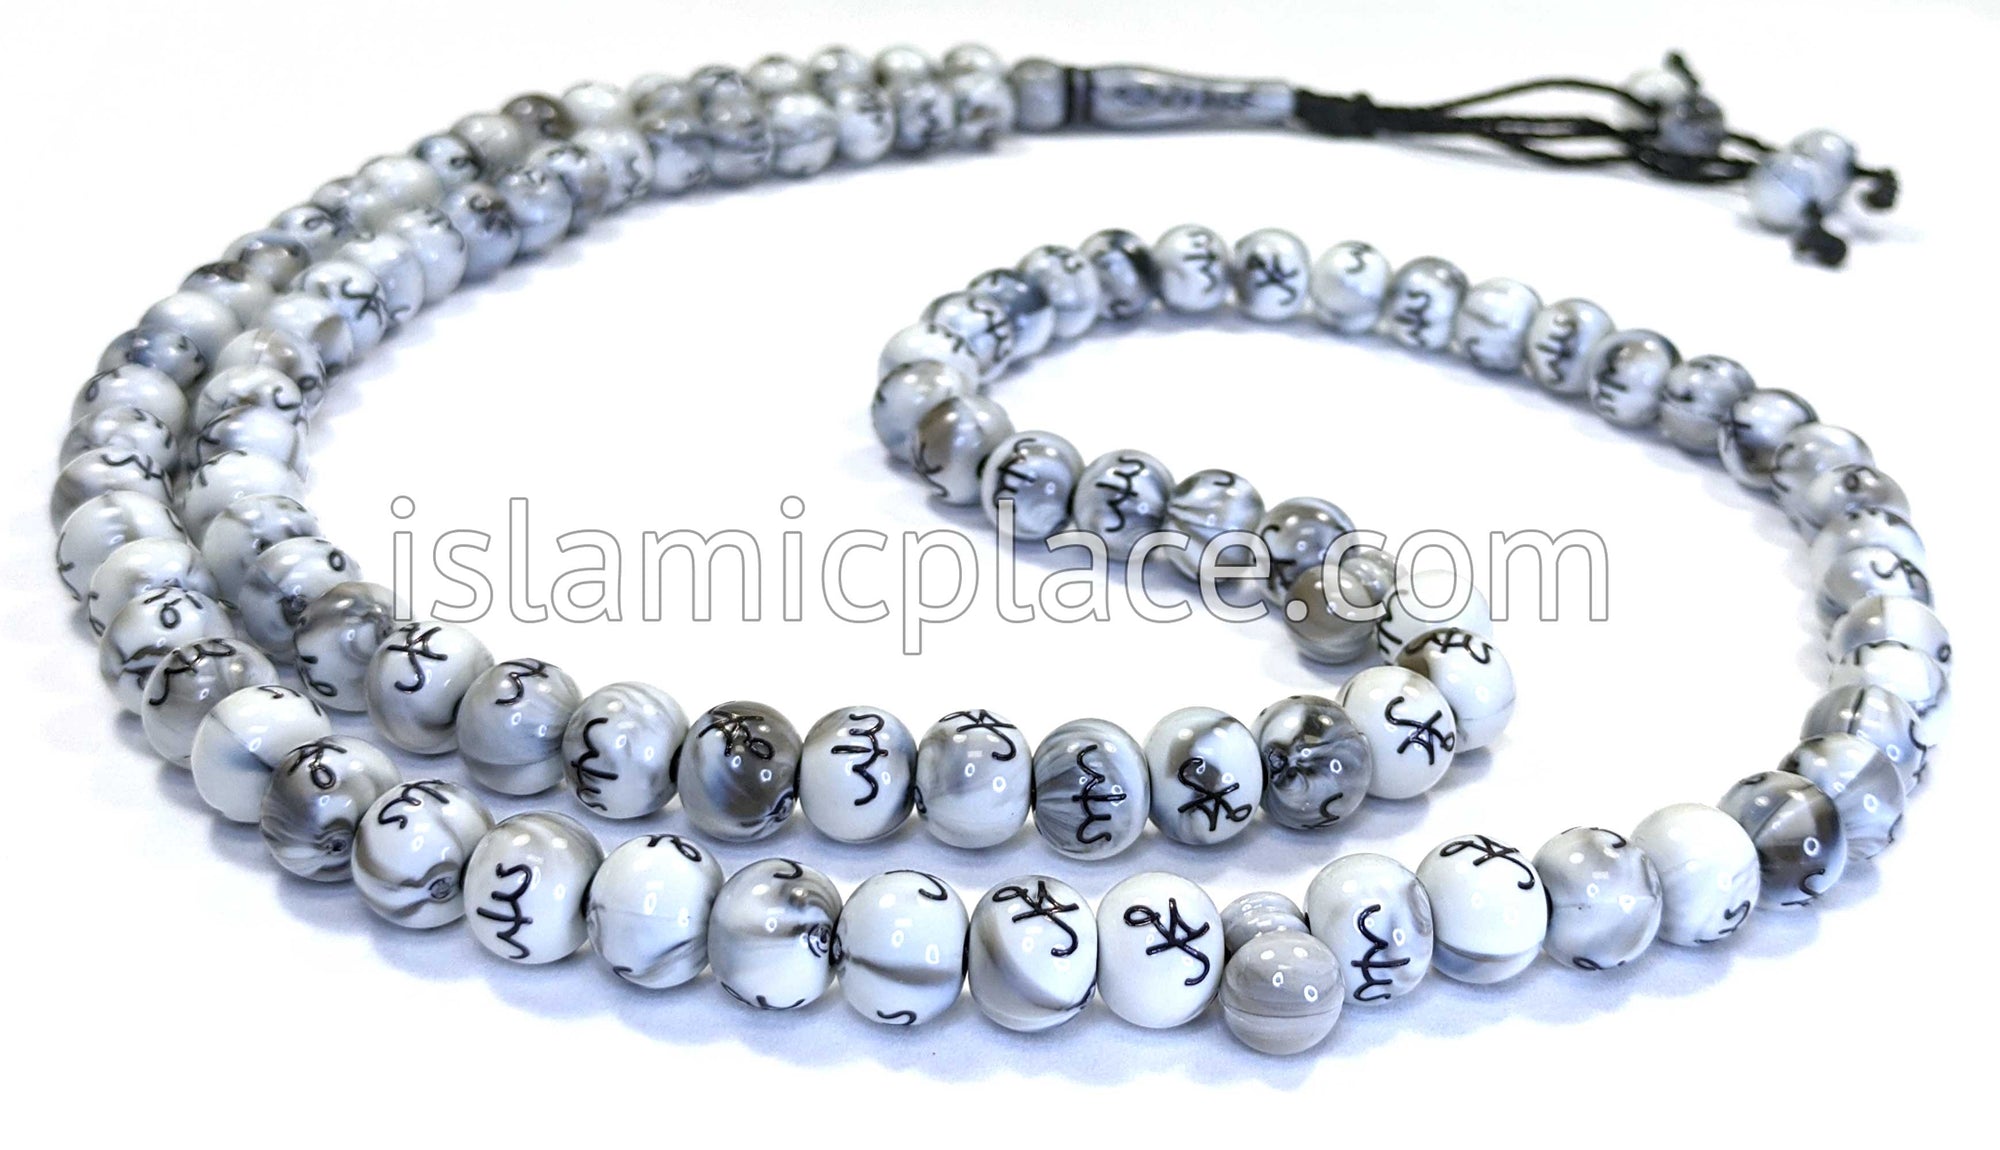 Graphite Gray - Large Bead Tasbih Prayer Beads with Allah & Muhammad Script